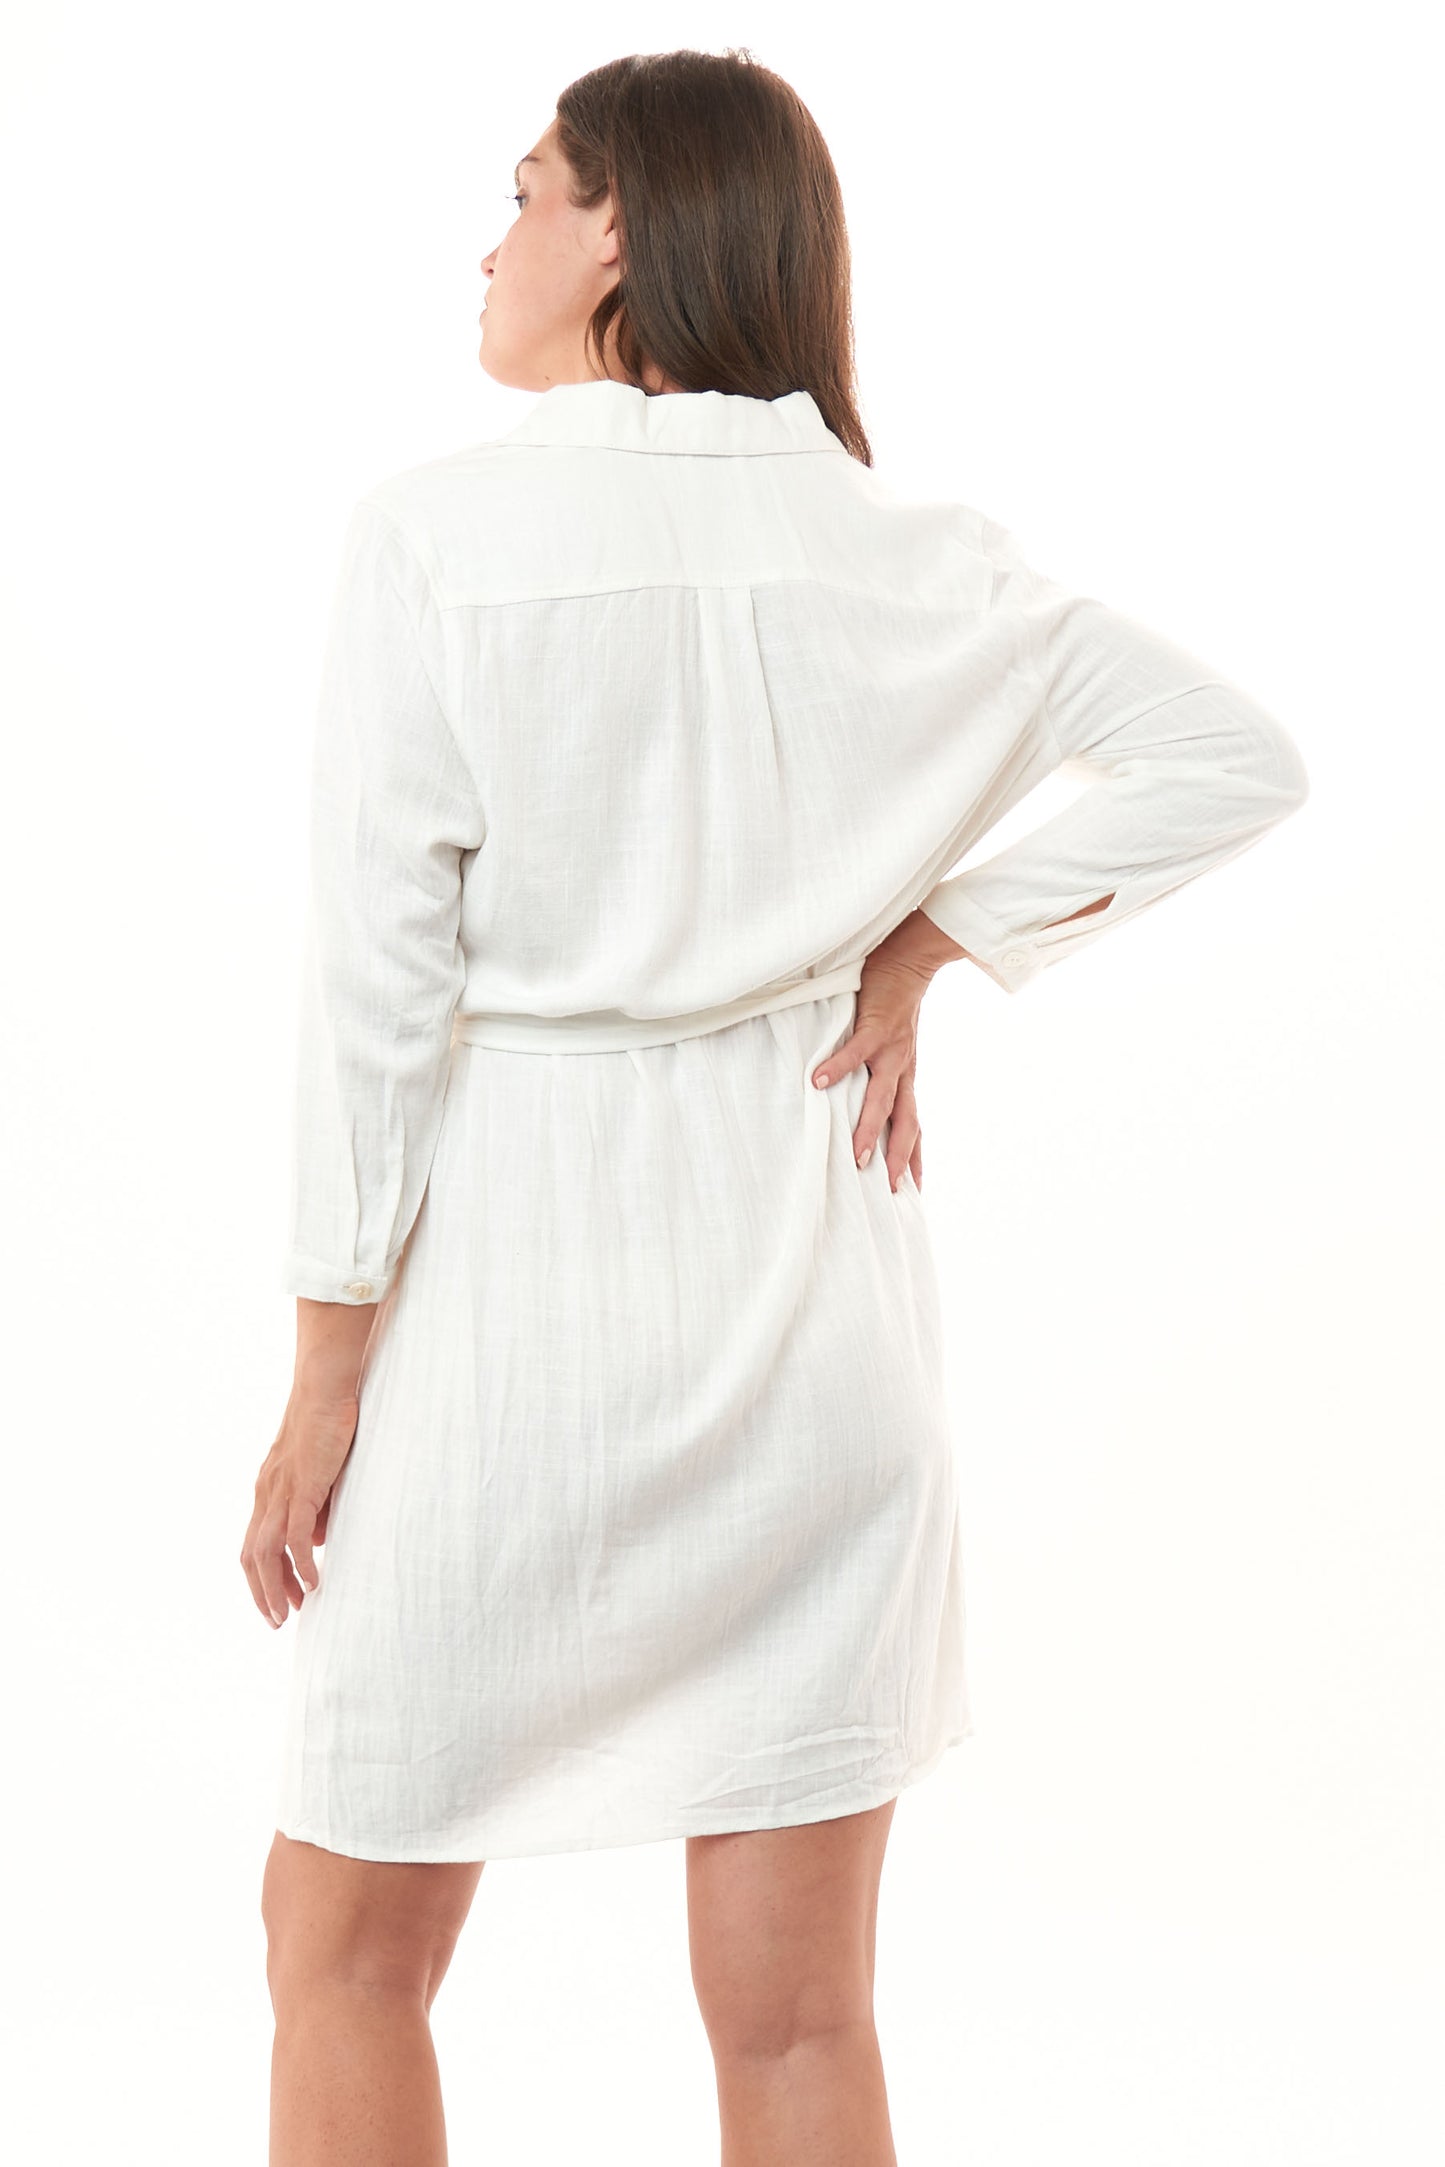 White Maternity Dress - 4